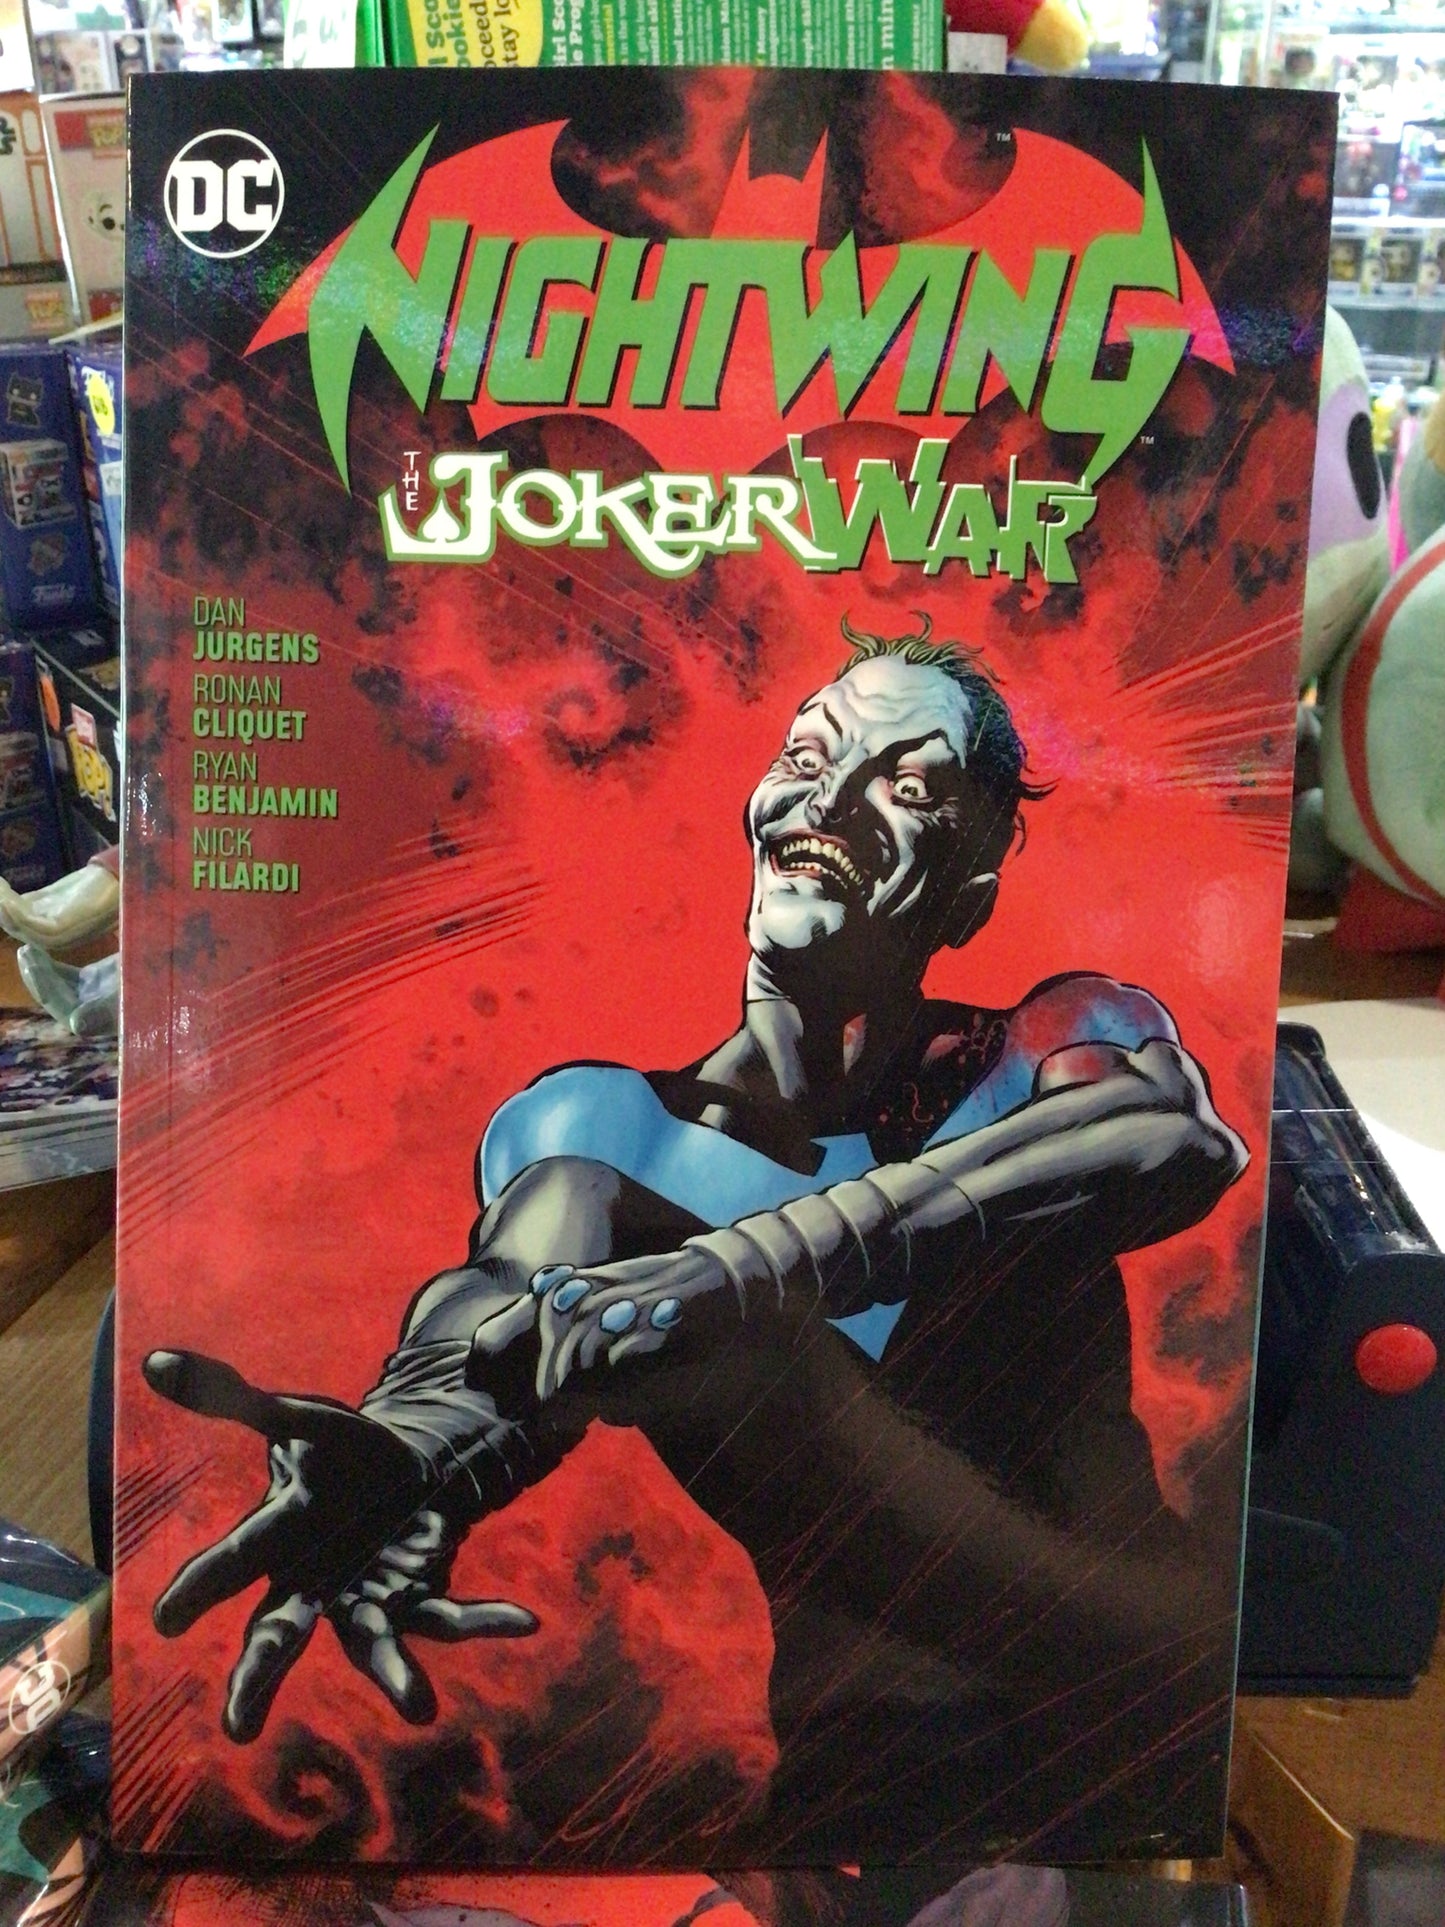 Nightwing: Joker War ! by DC Comics